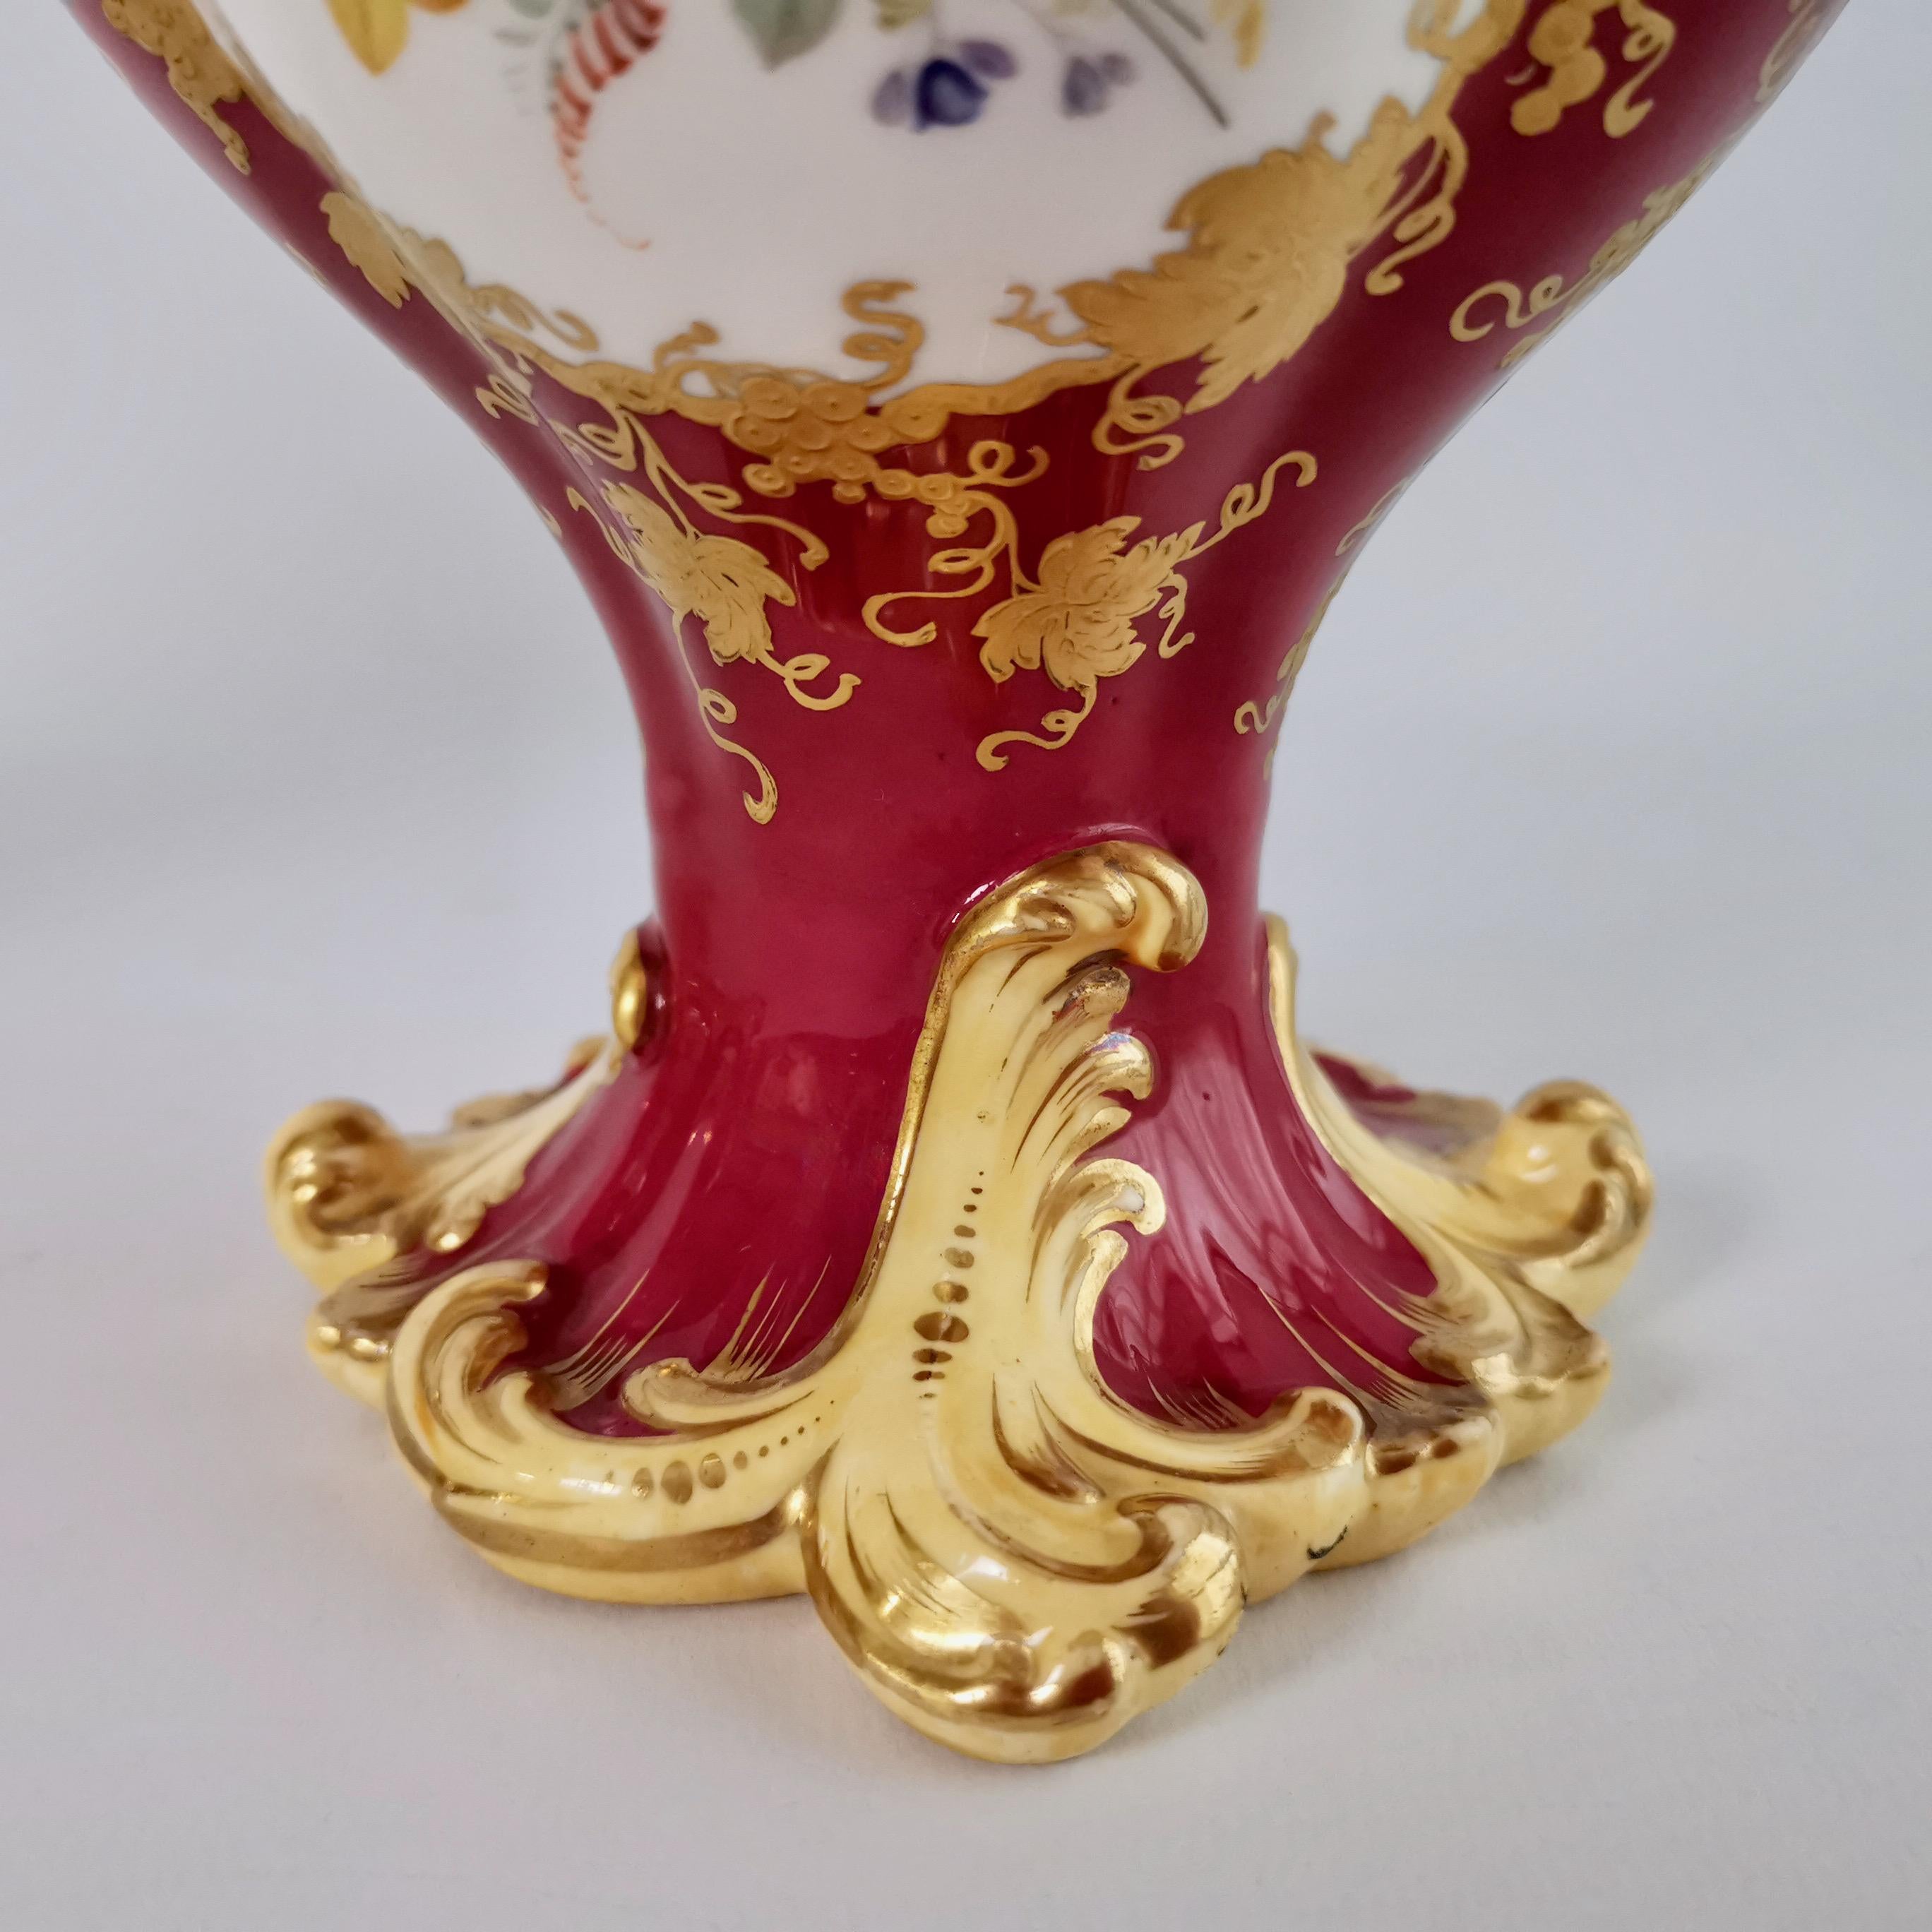 H&R Daniel Pair of Potpourri Vases, Maroon, Birds, Flowers, Rococo Revival c1840 For Sale 5